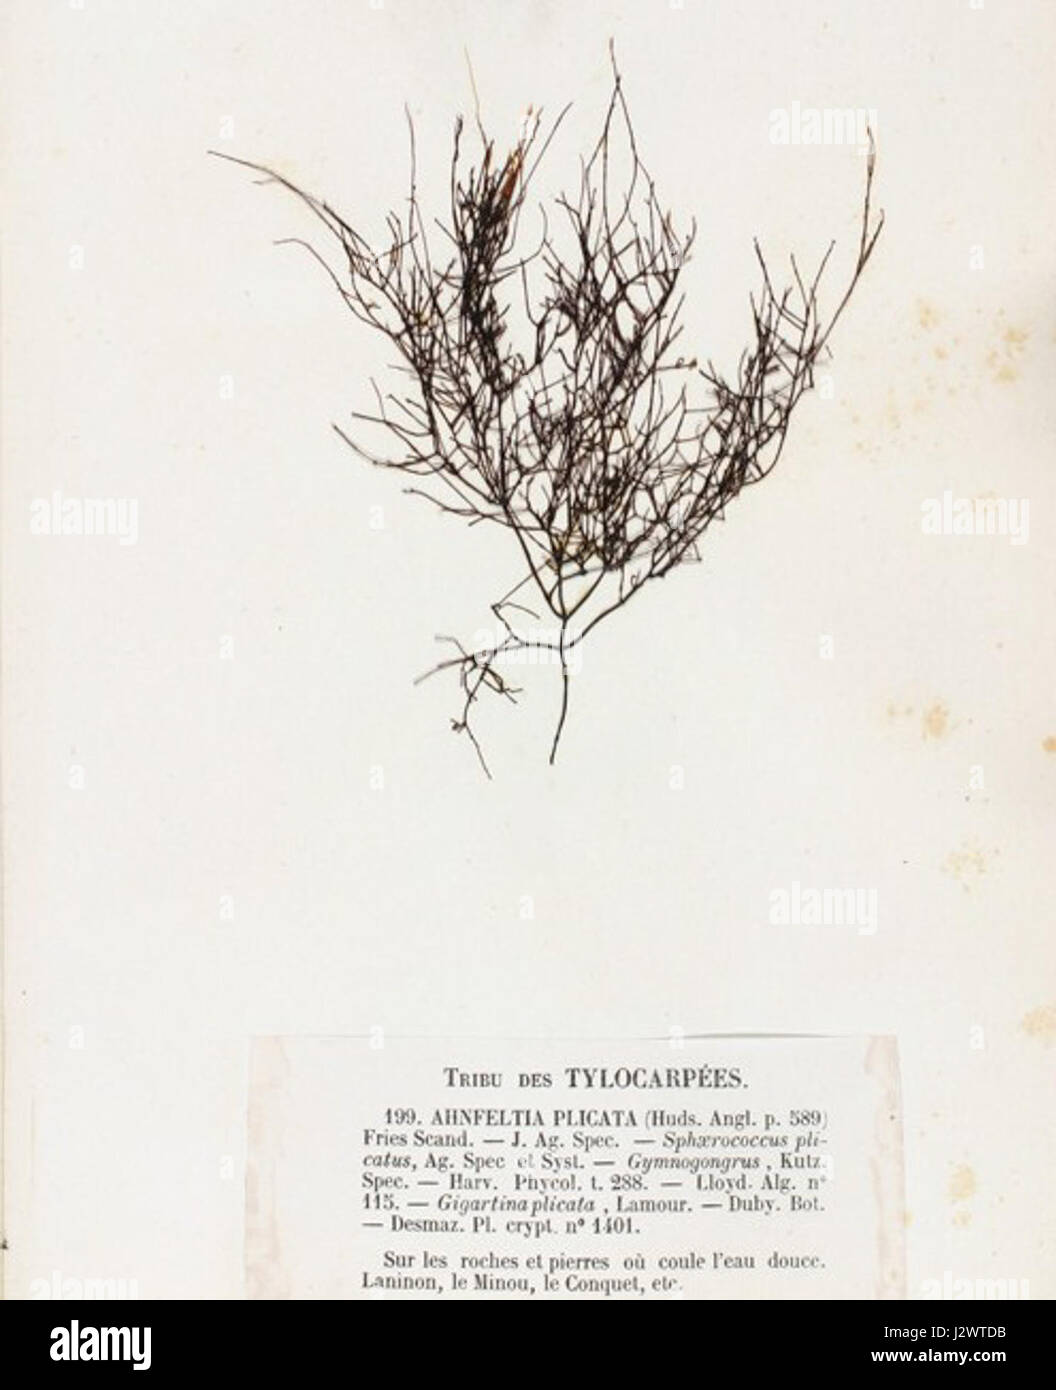 Ahnfeltia plicata Crouan Stock Photo